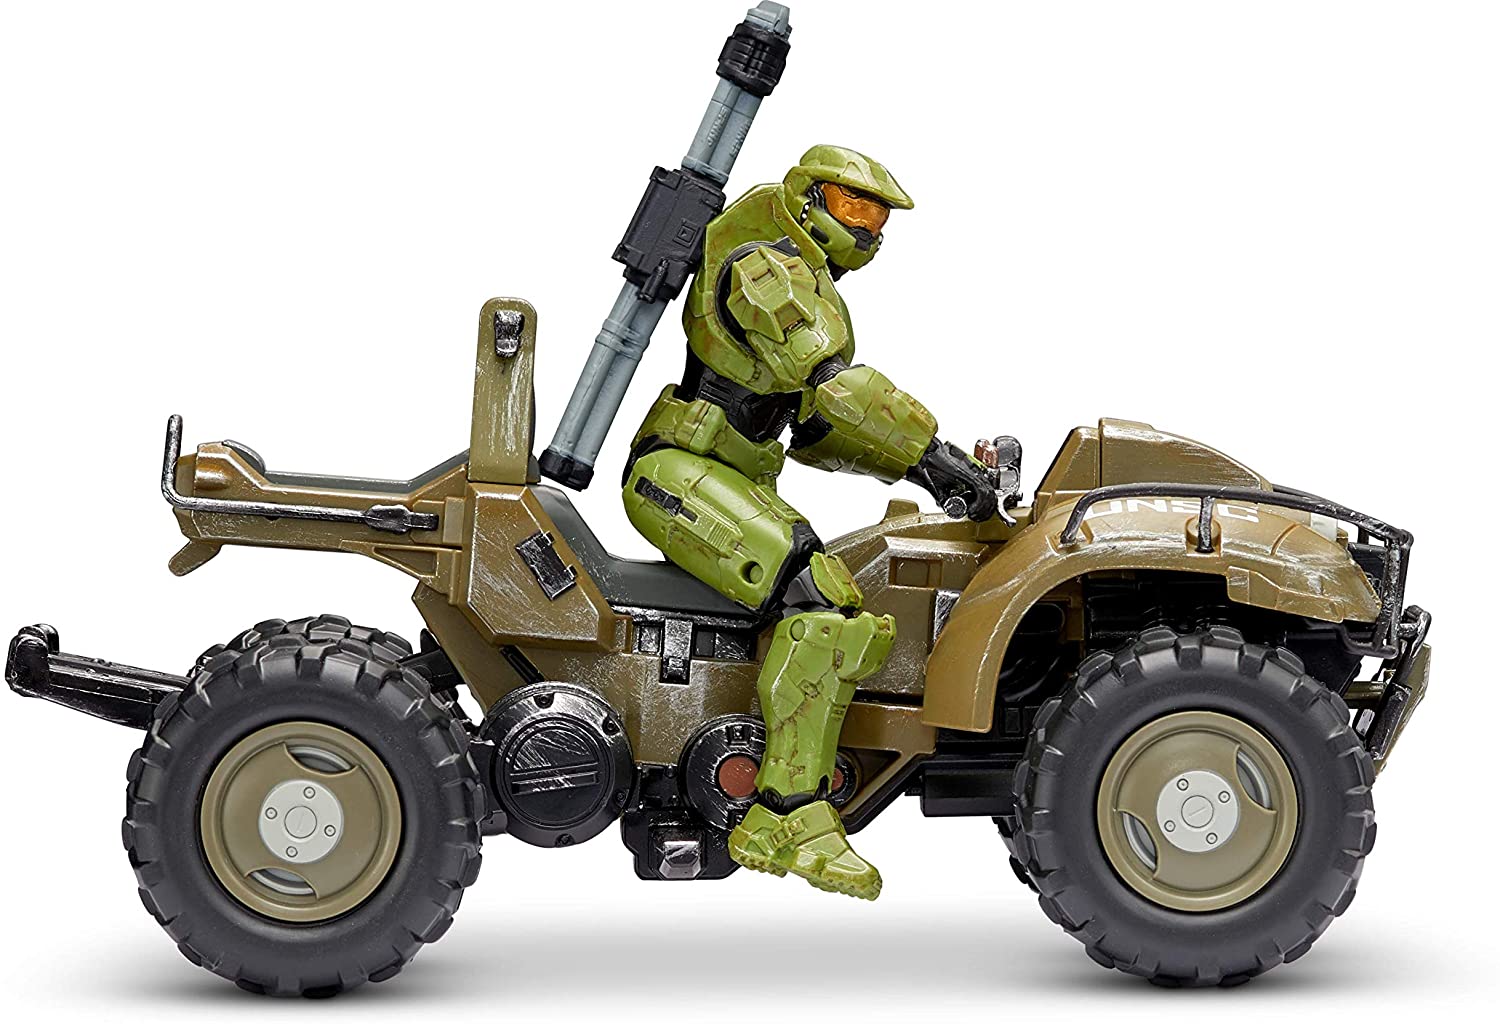 4-Inch 'World of Halo' Figure and Vehicle